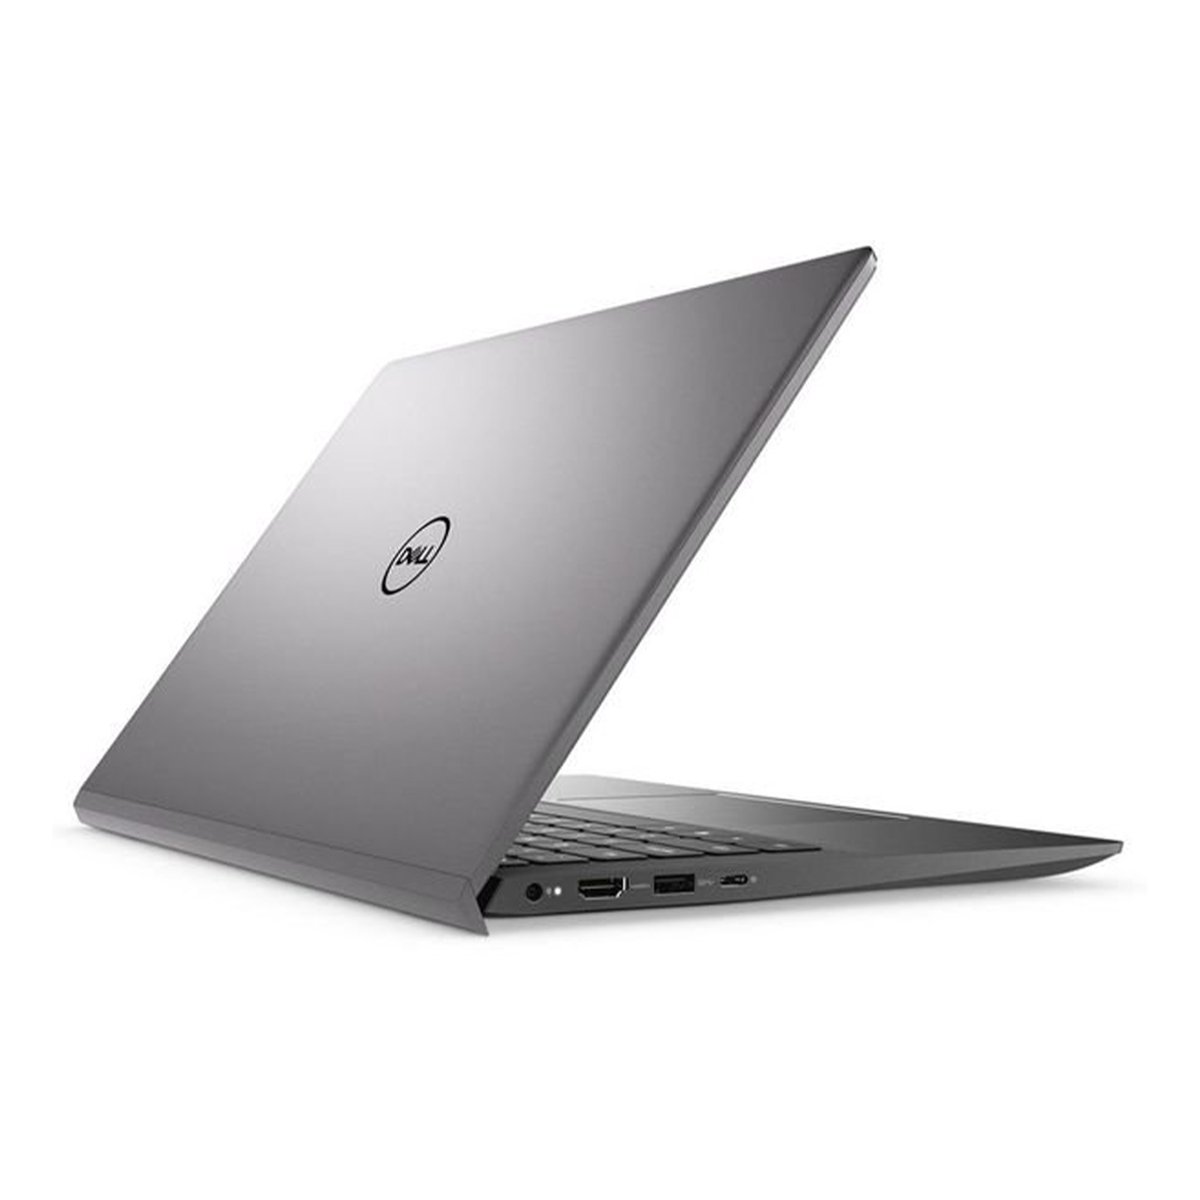 Dell 5401-VOS-6003-GRY Laptop,Core i7-1065G7,16GB RAM,512 GB SSD,NVIDIA GeForce MX330 2GB,Windows10,14.0inch FHD,Grey